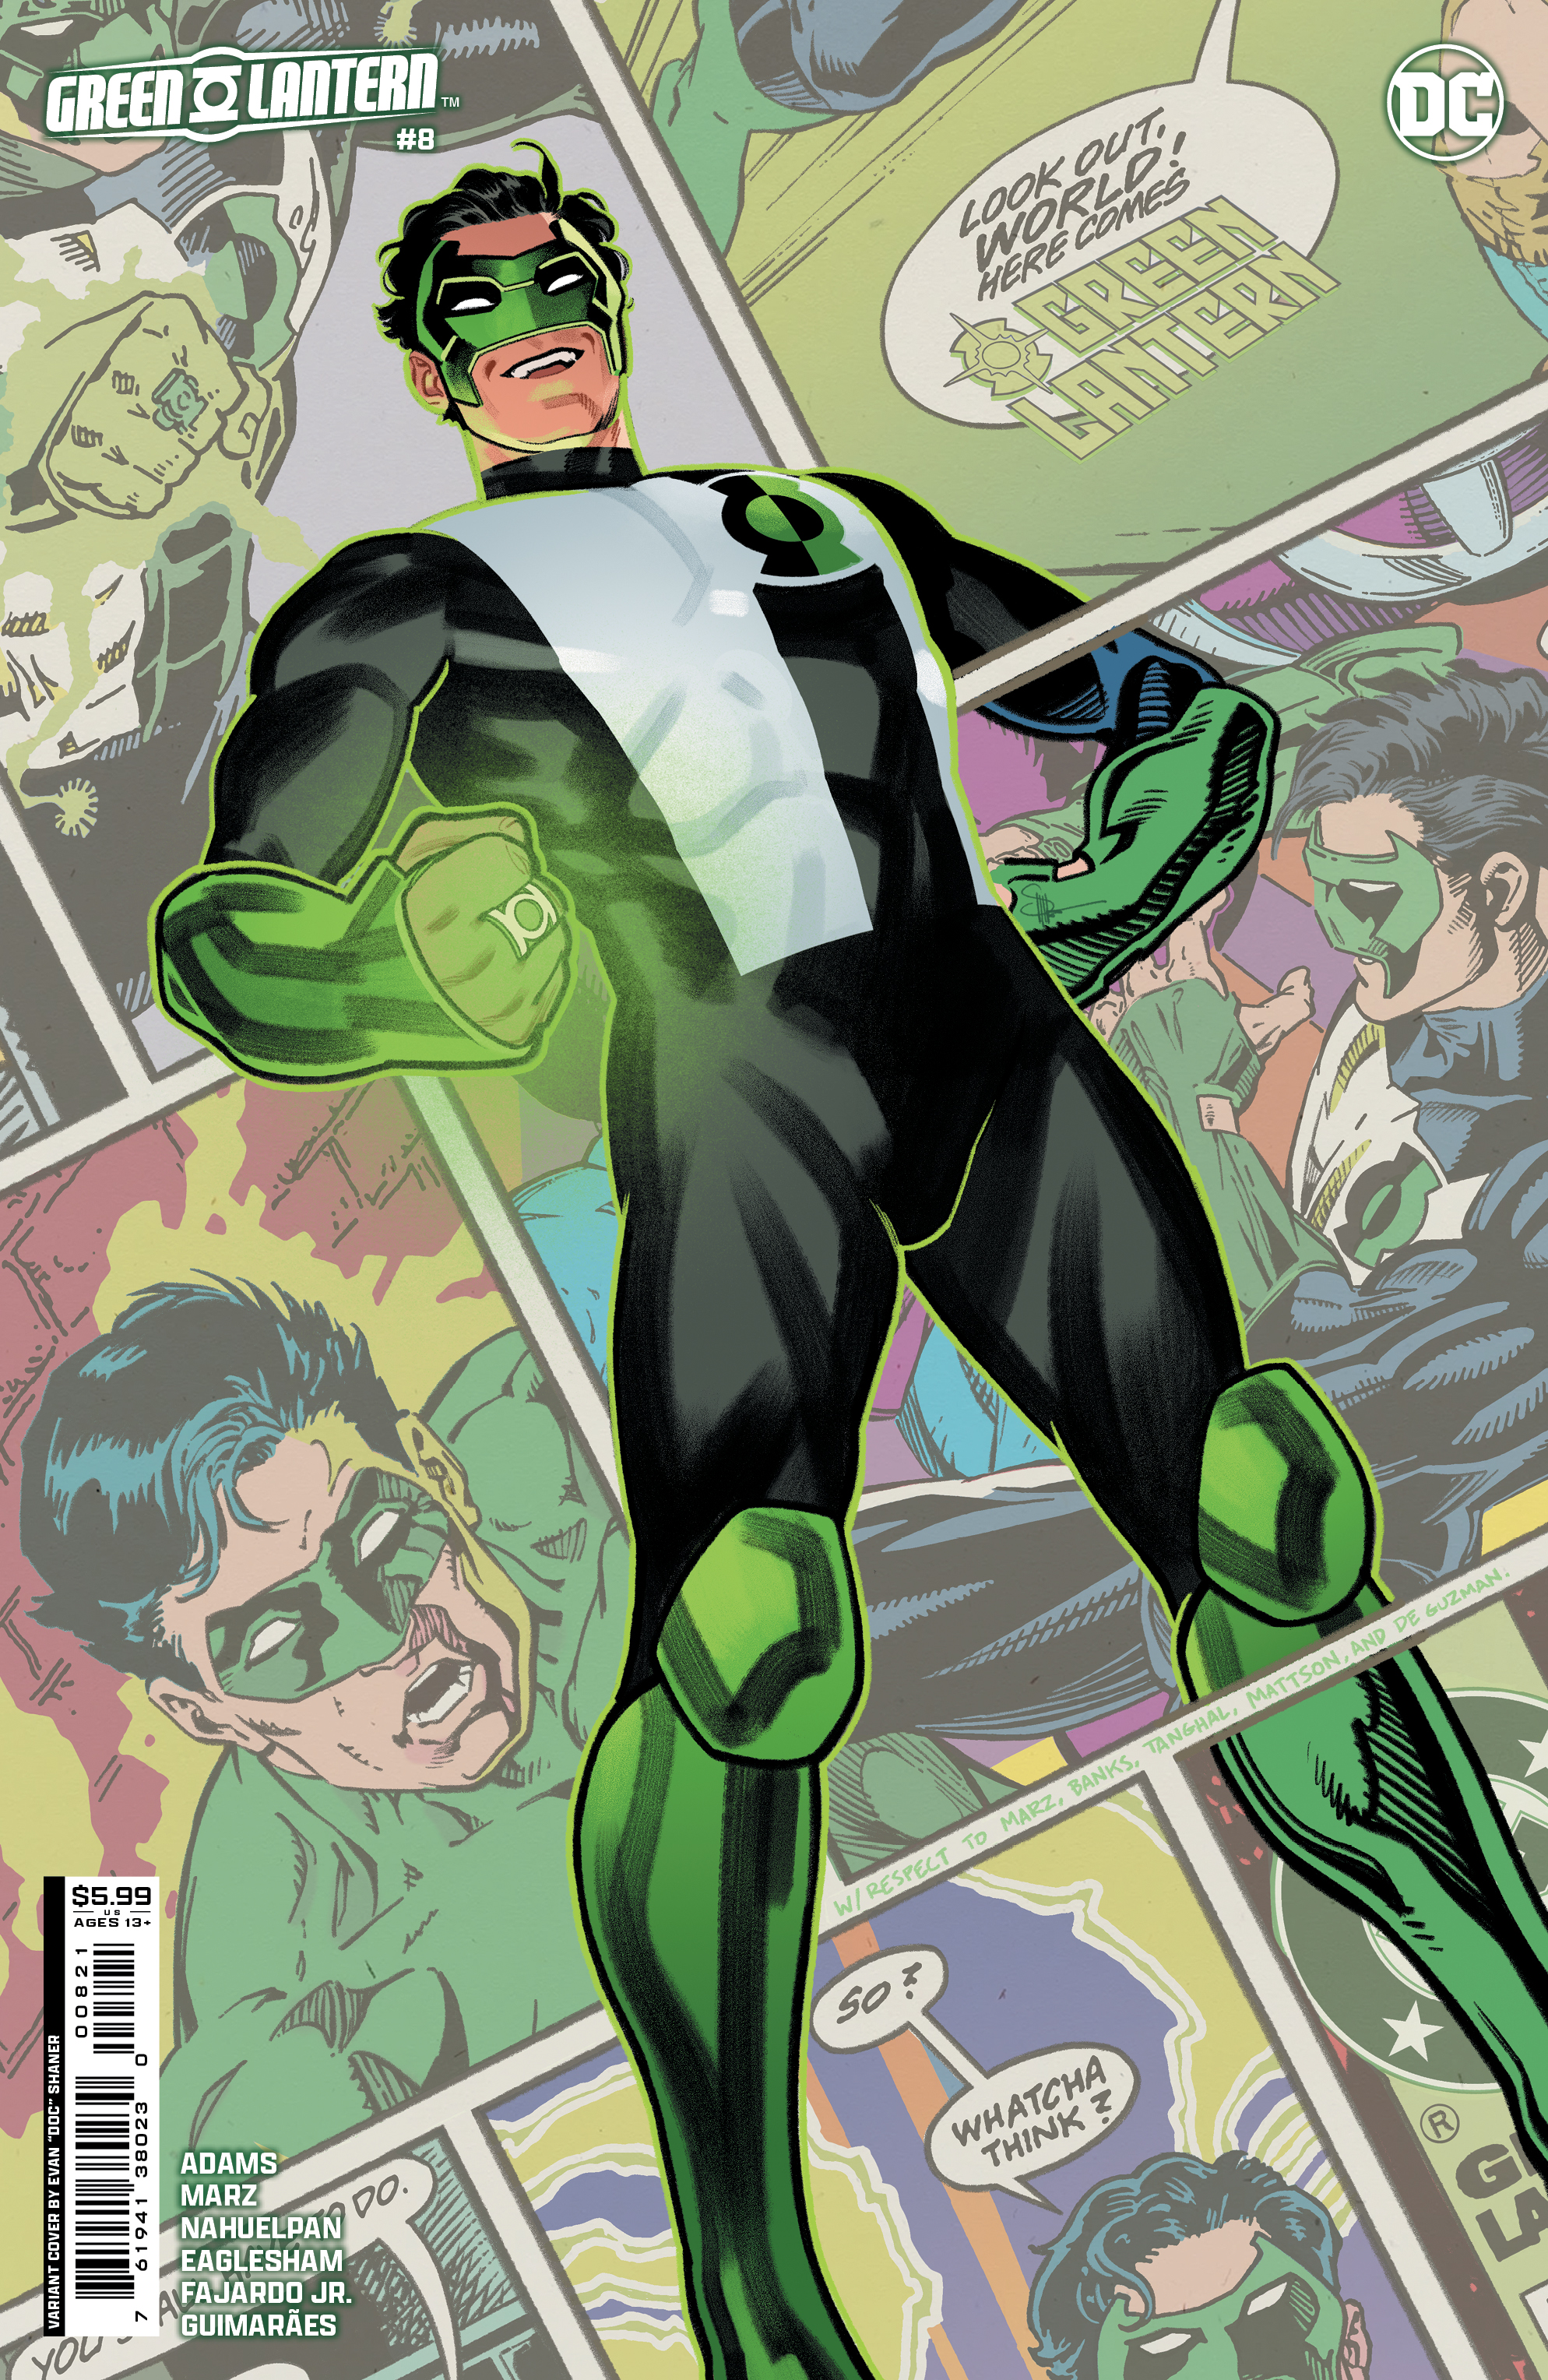 Kunstwerke aus Green Lantern #8